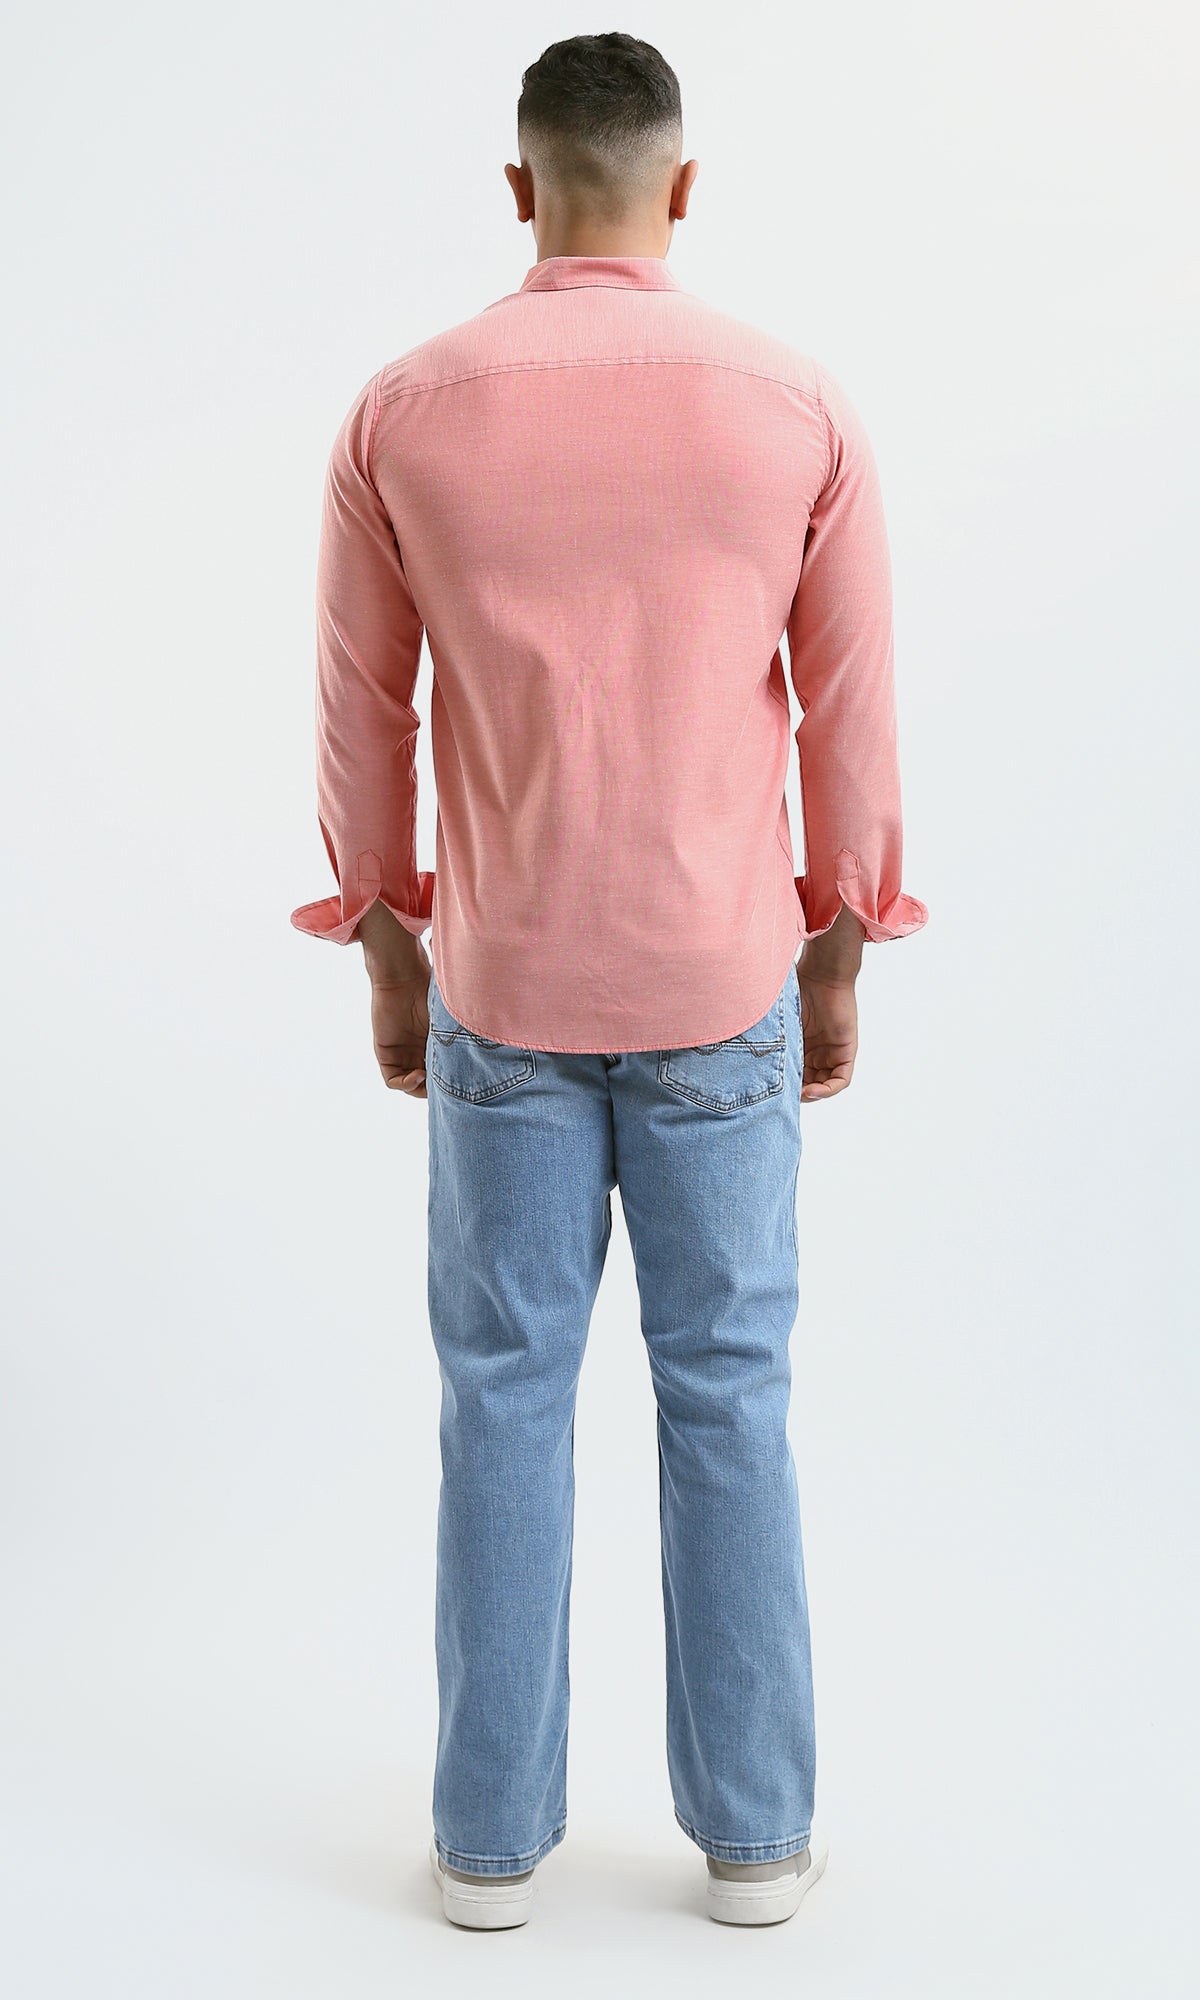 O181000 Solid Coral Orange Shirt With Front Pocket